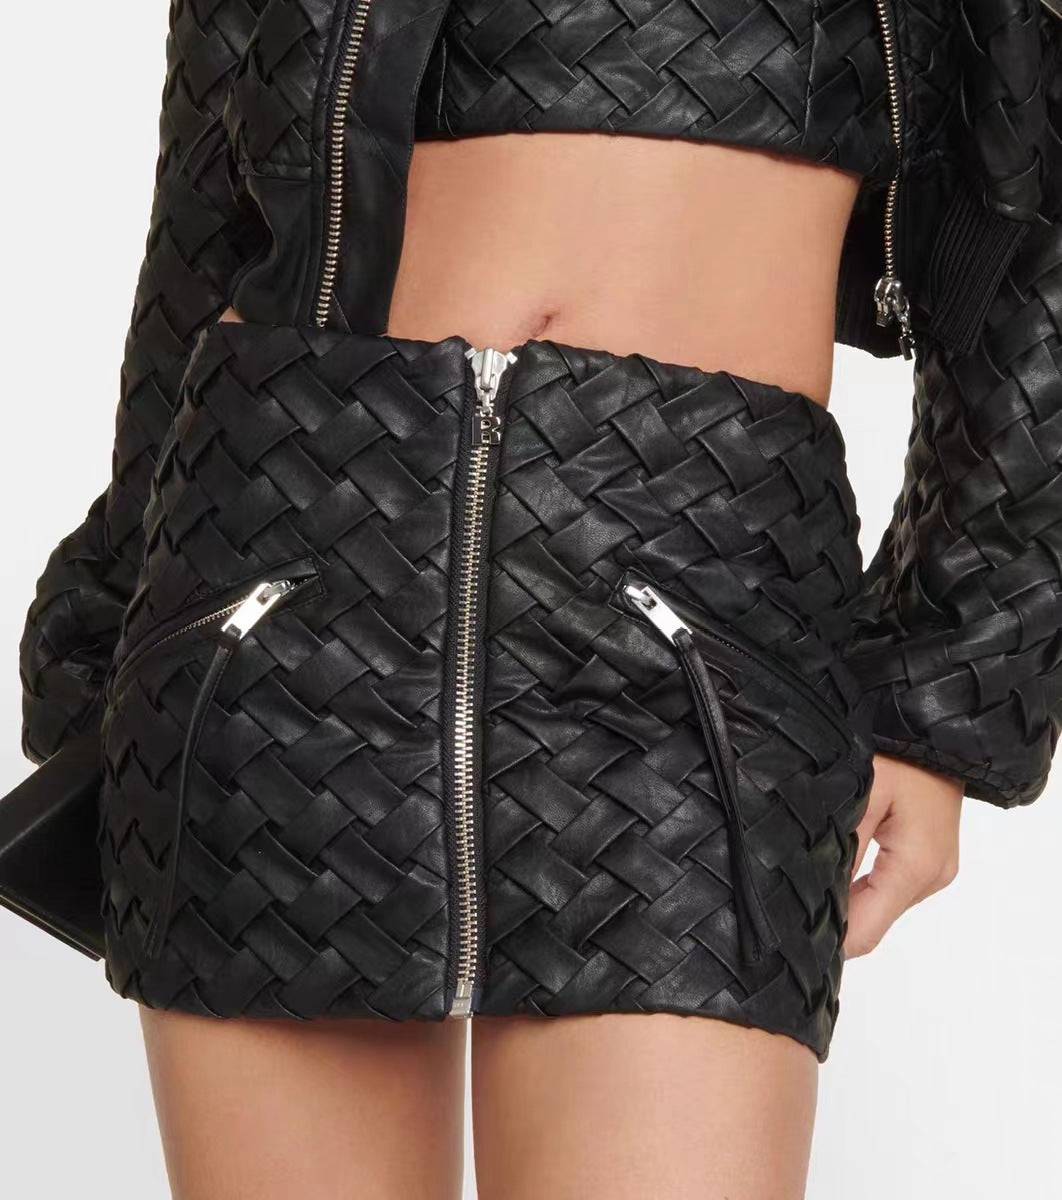 Roseline Zipper Weaving Jacket & Skirt Set - Hot fashionista